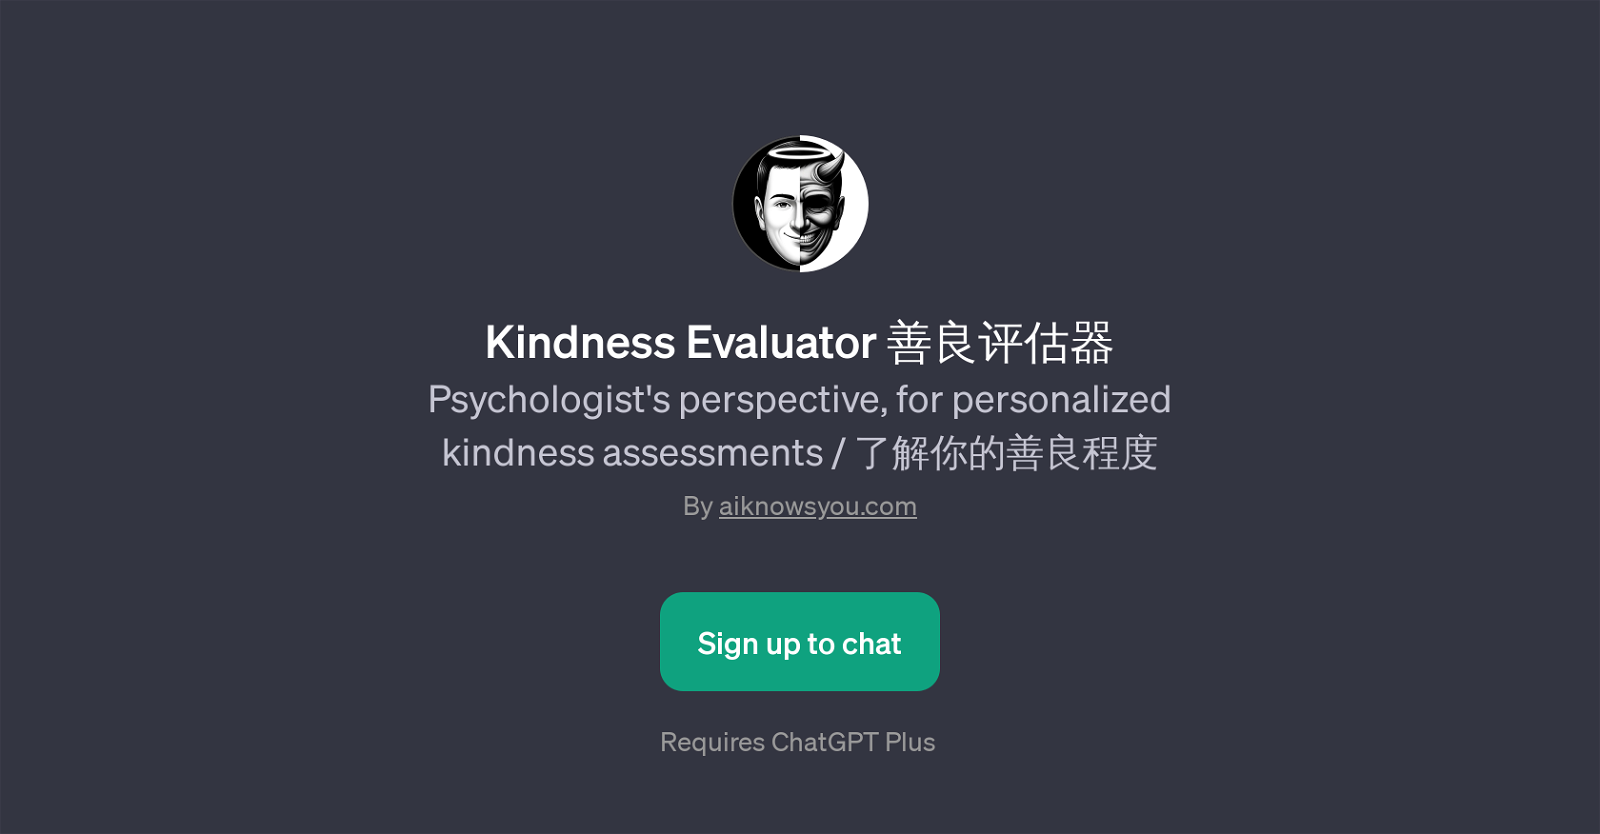 Kindness Evaluator website